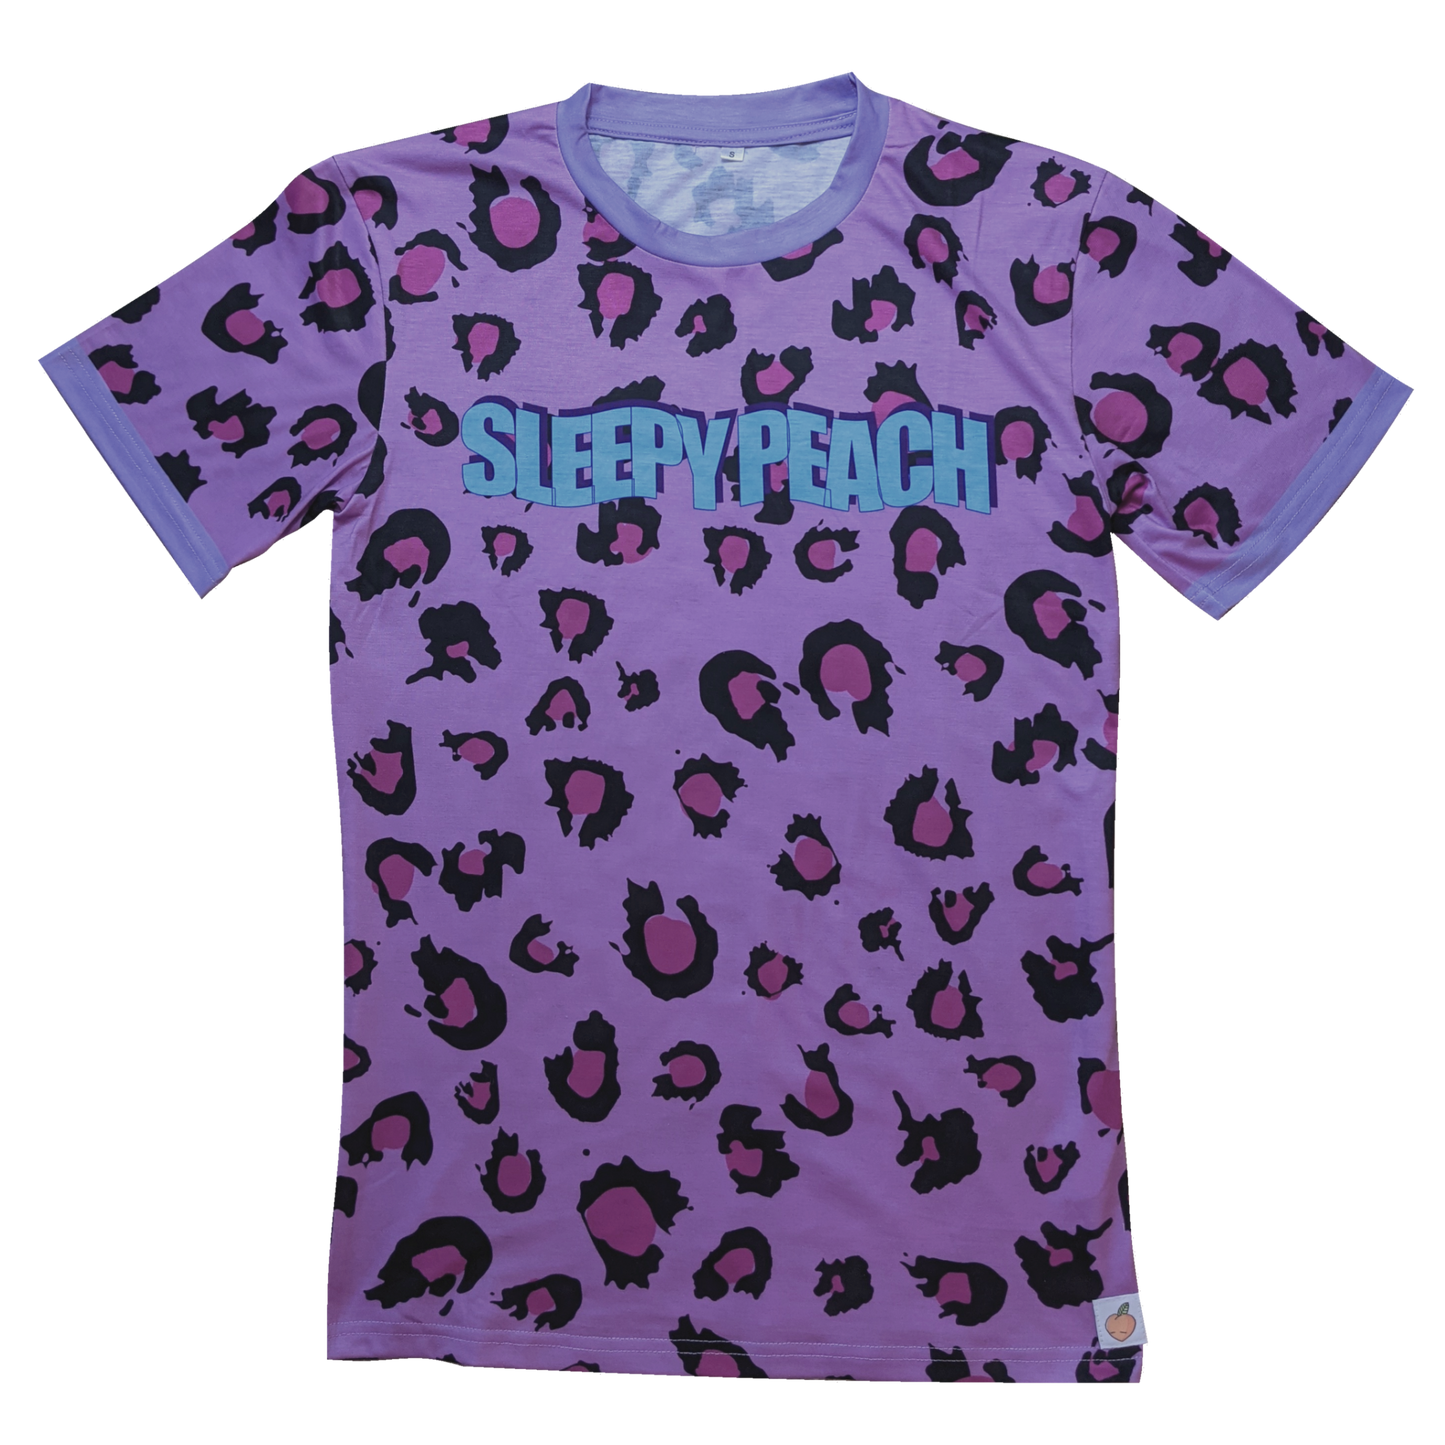 The Purple Leopard Shirt - Sleepy Peach